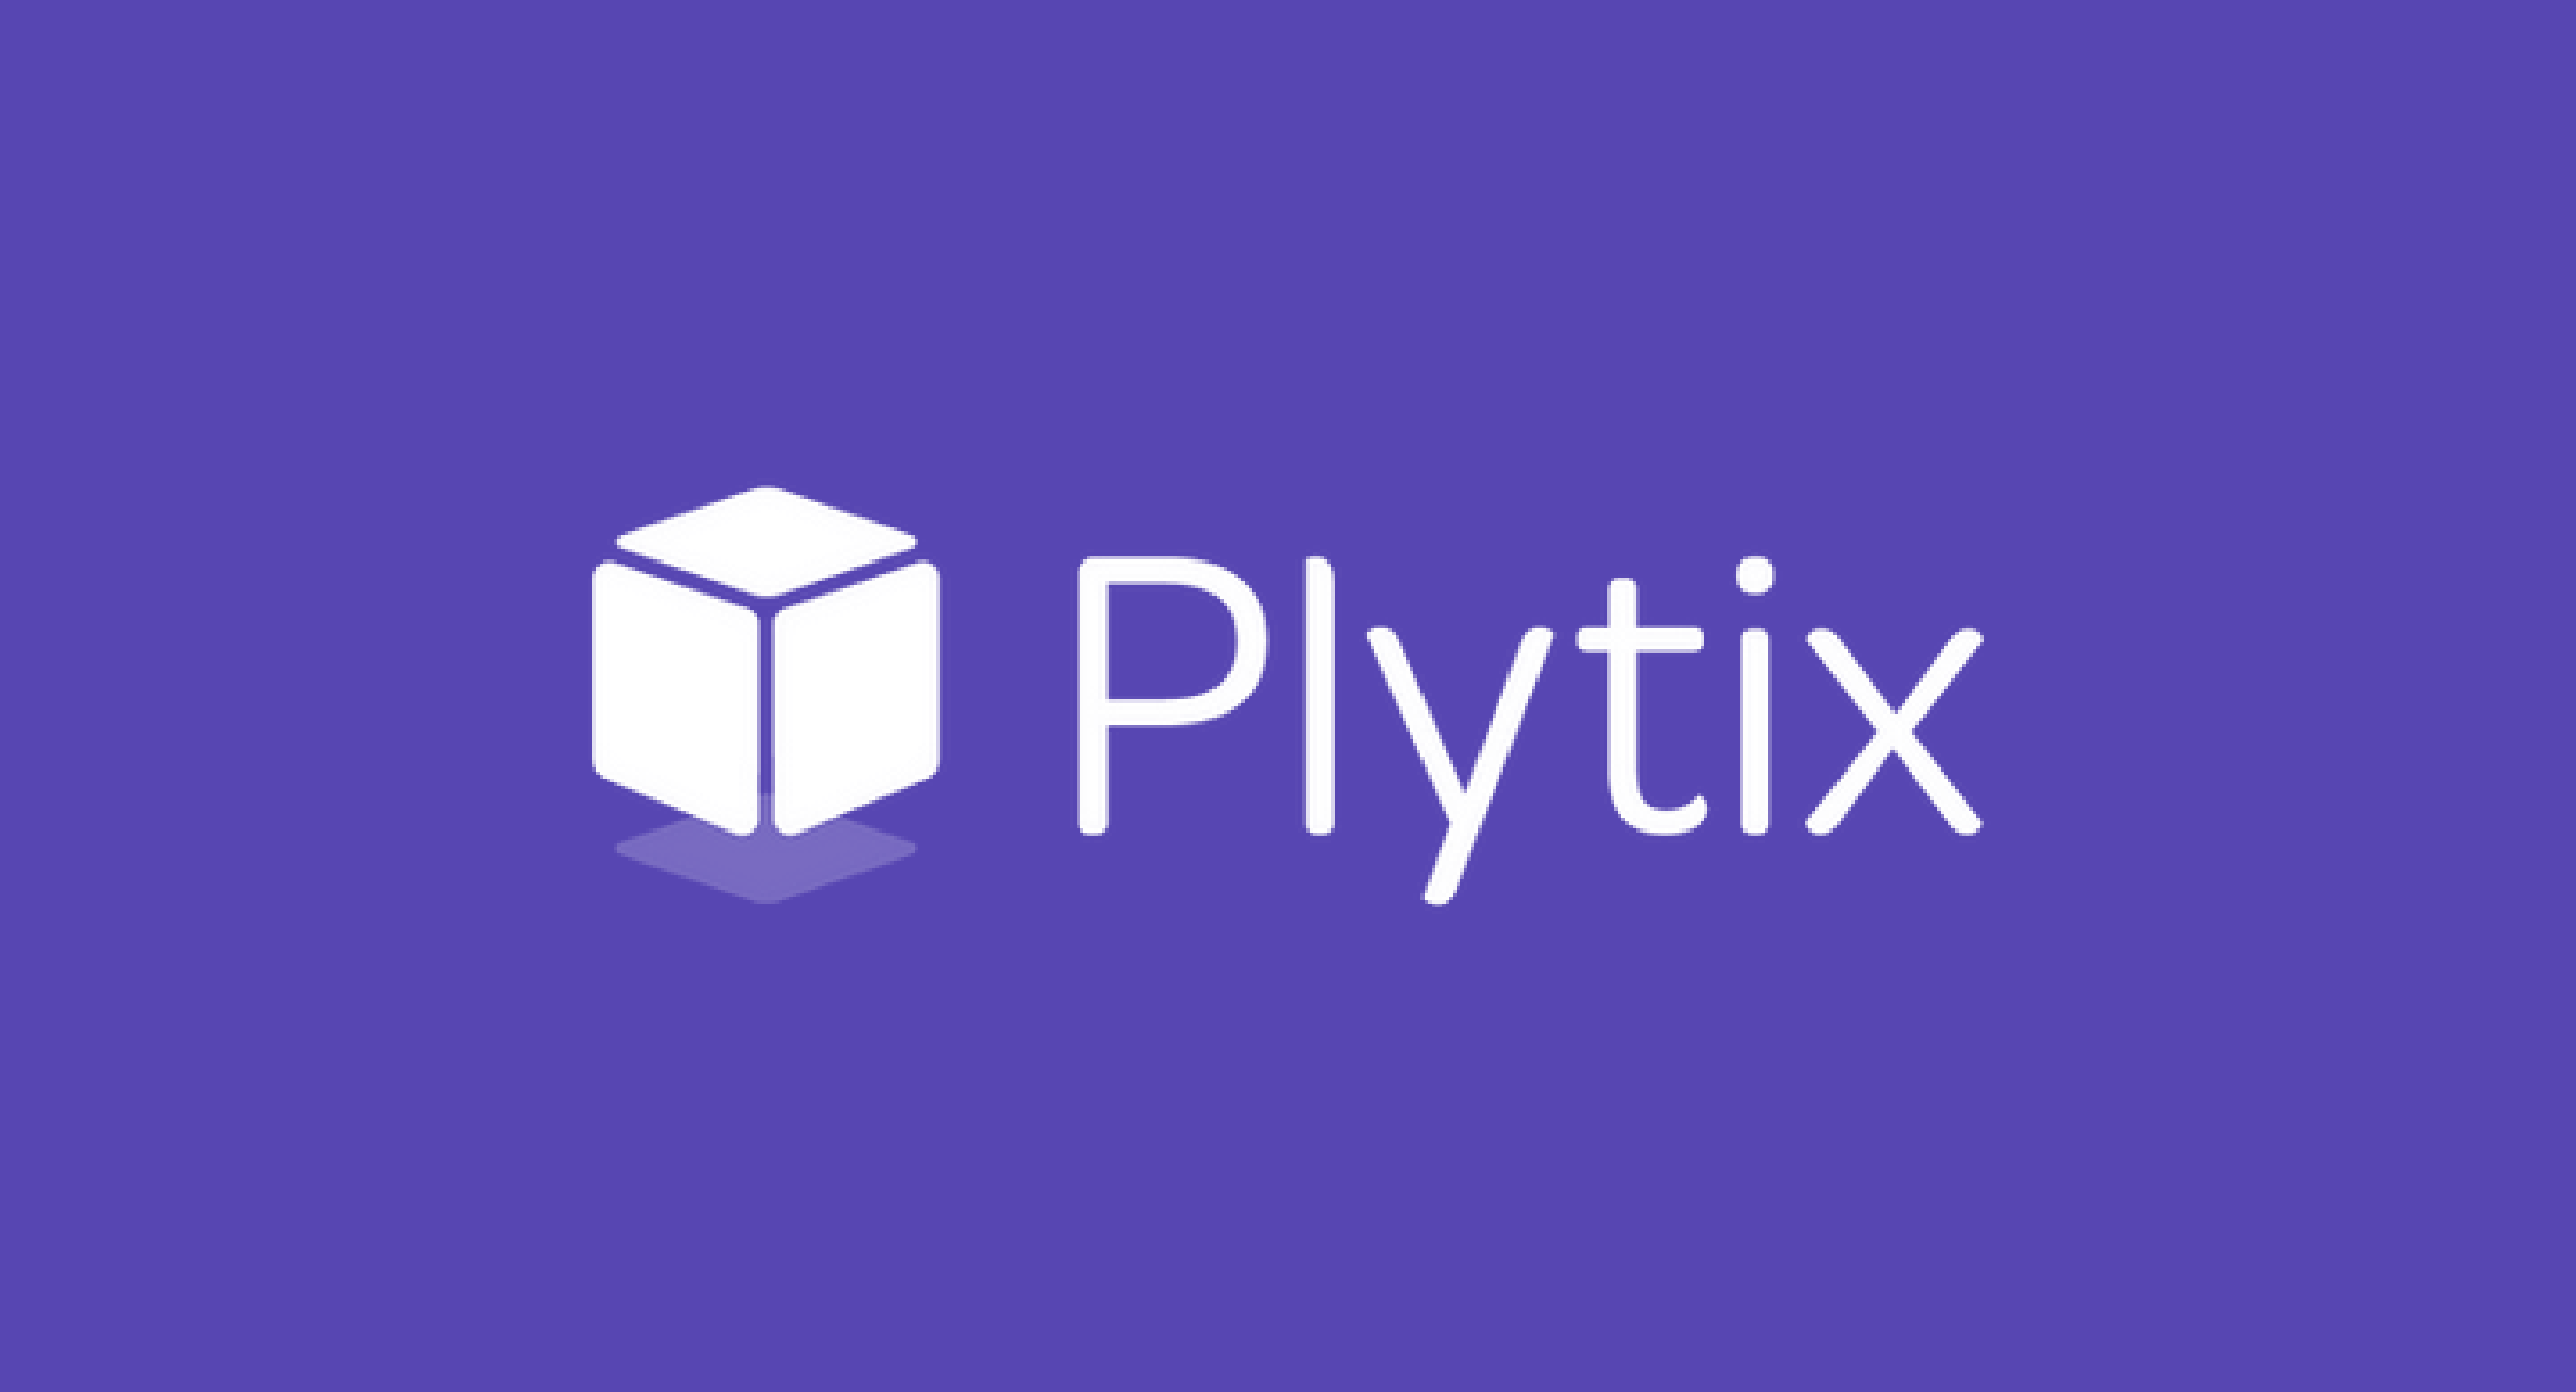 Plytix 使用 G2 供应商解决方案将电力线减少了 82%